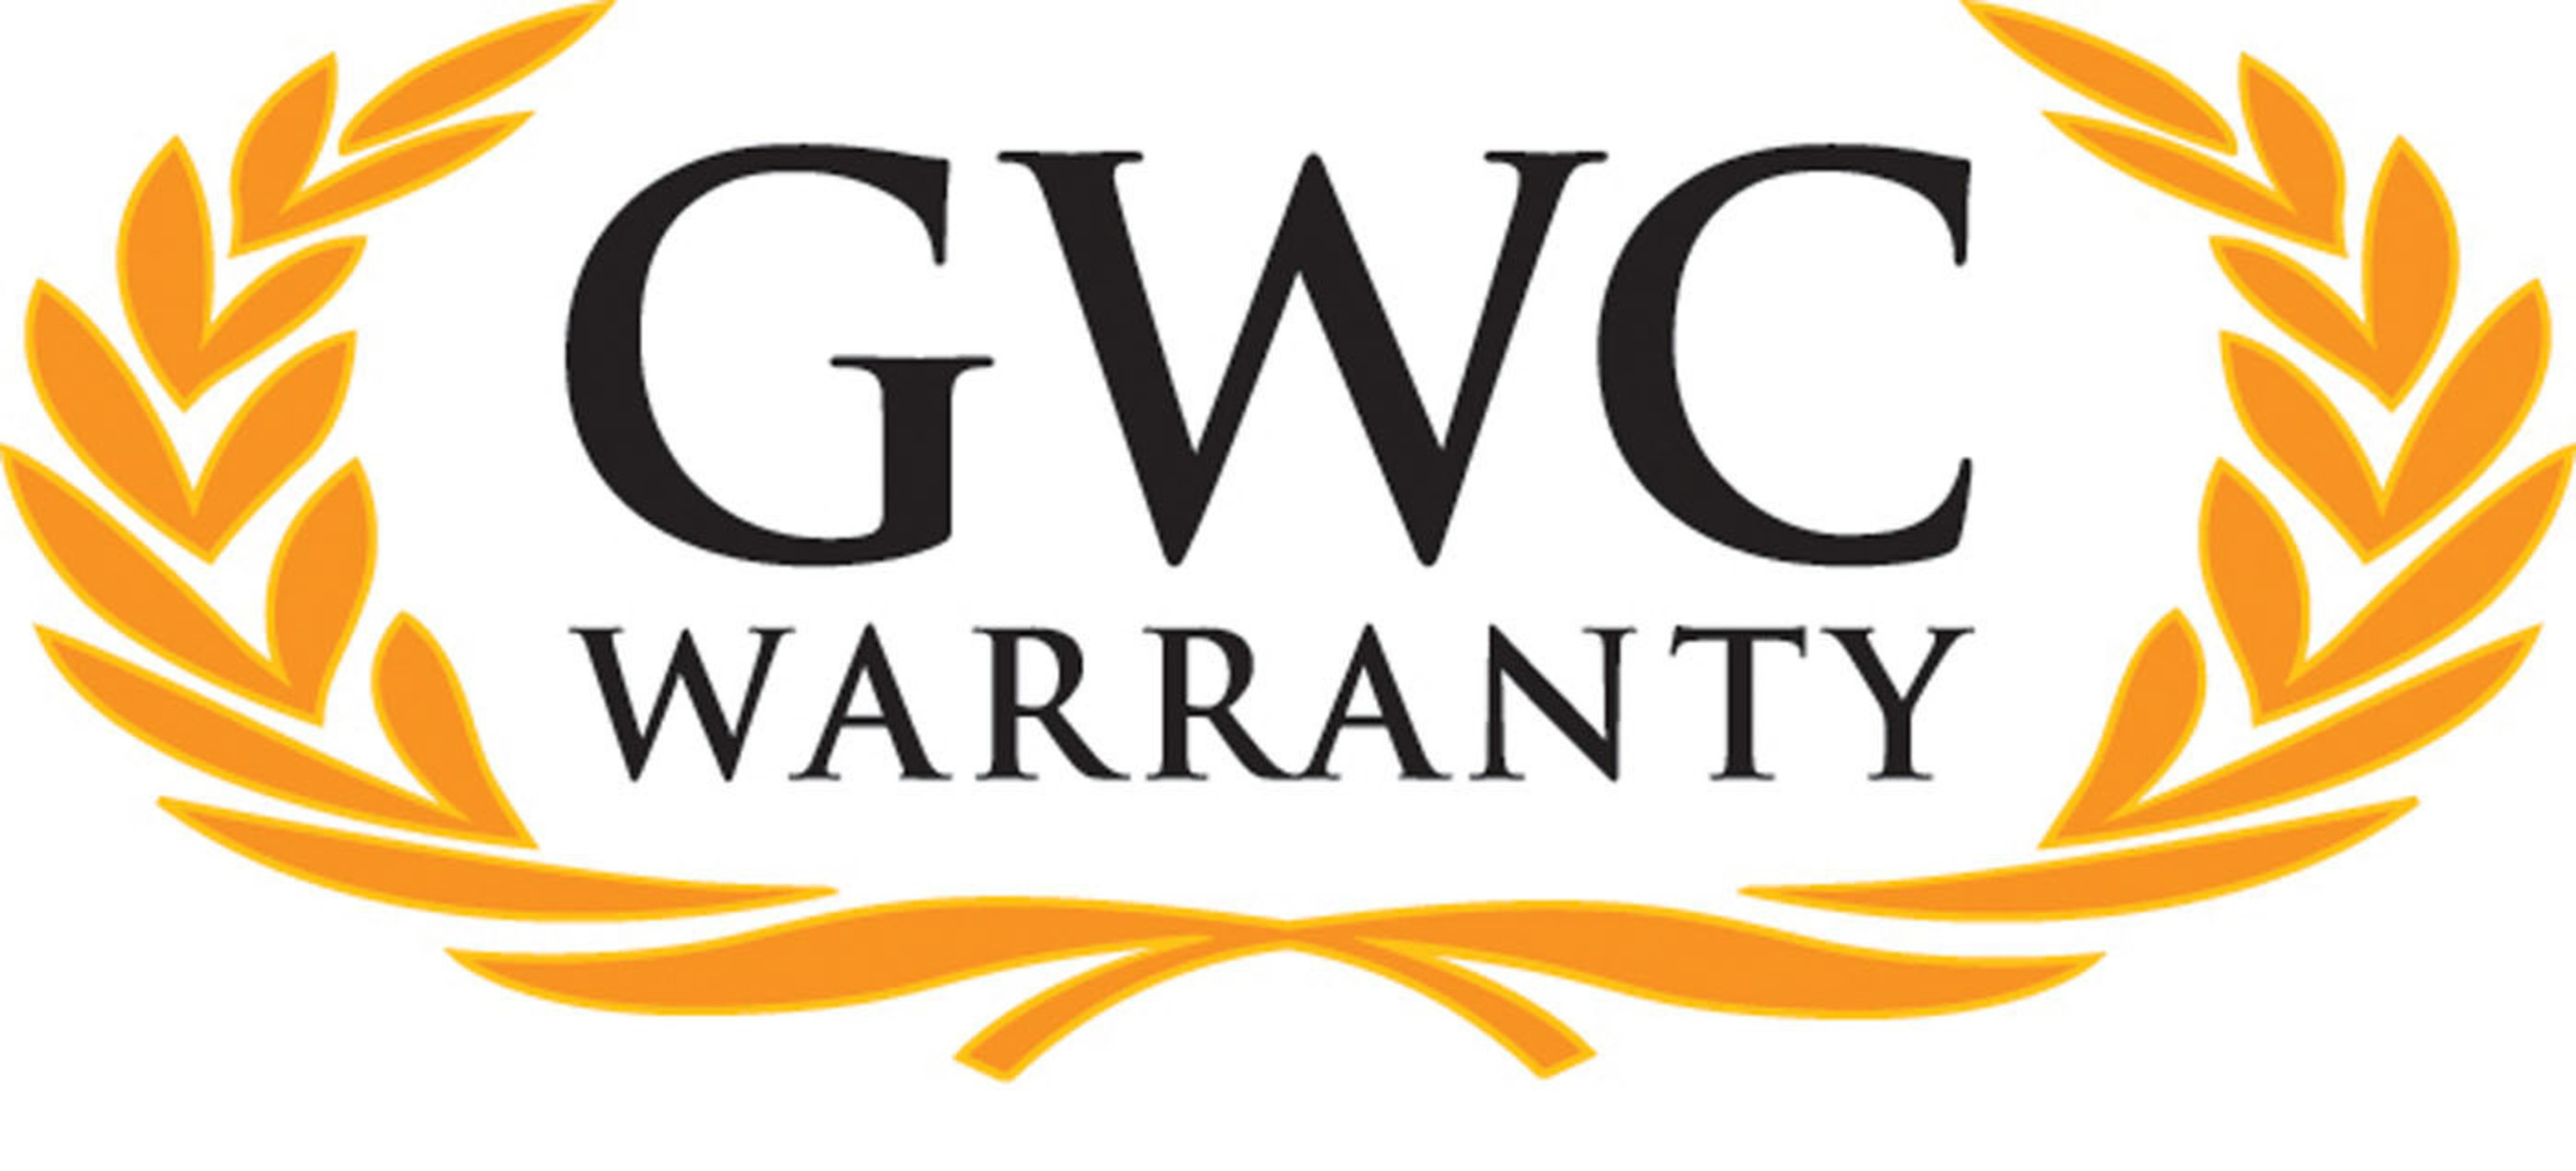 GWC Warranty Logo. (PRNewsFoto/GWC WARRANTY)